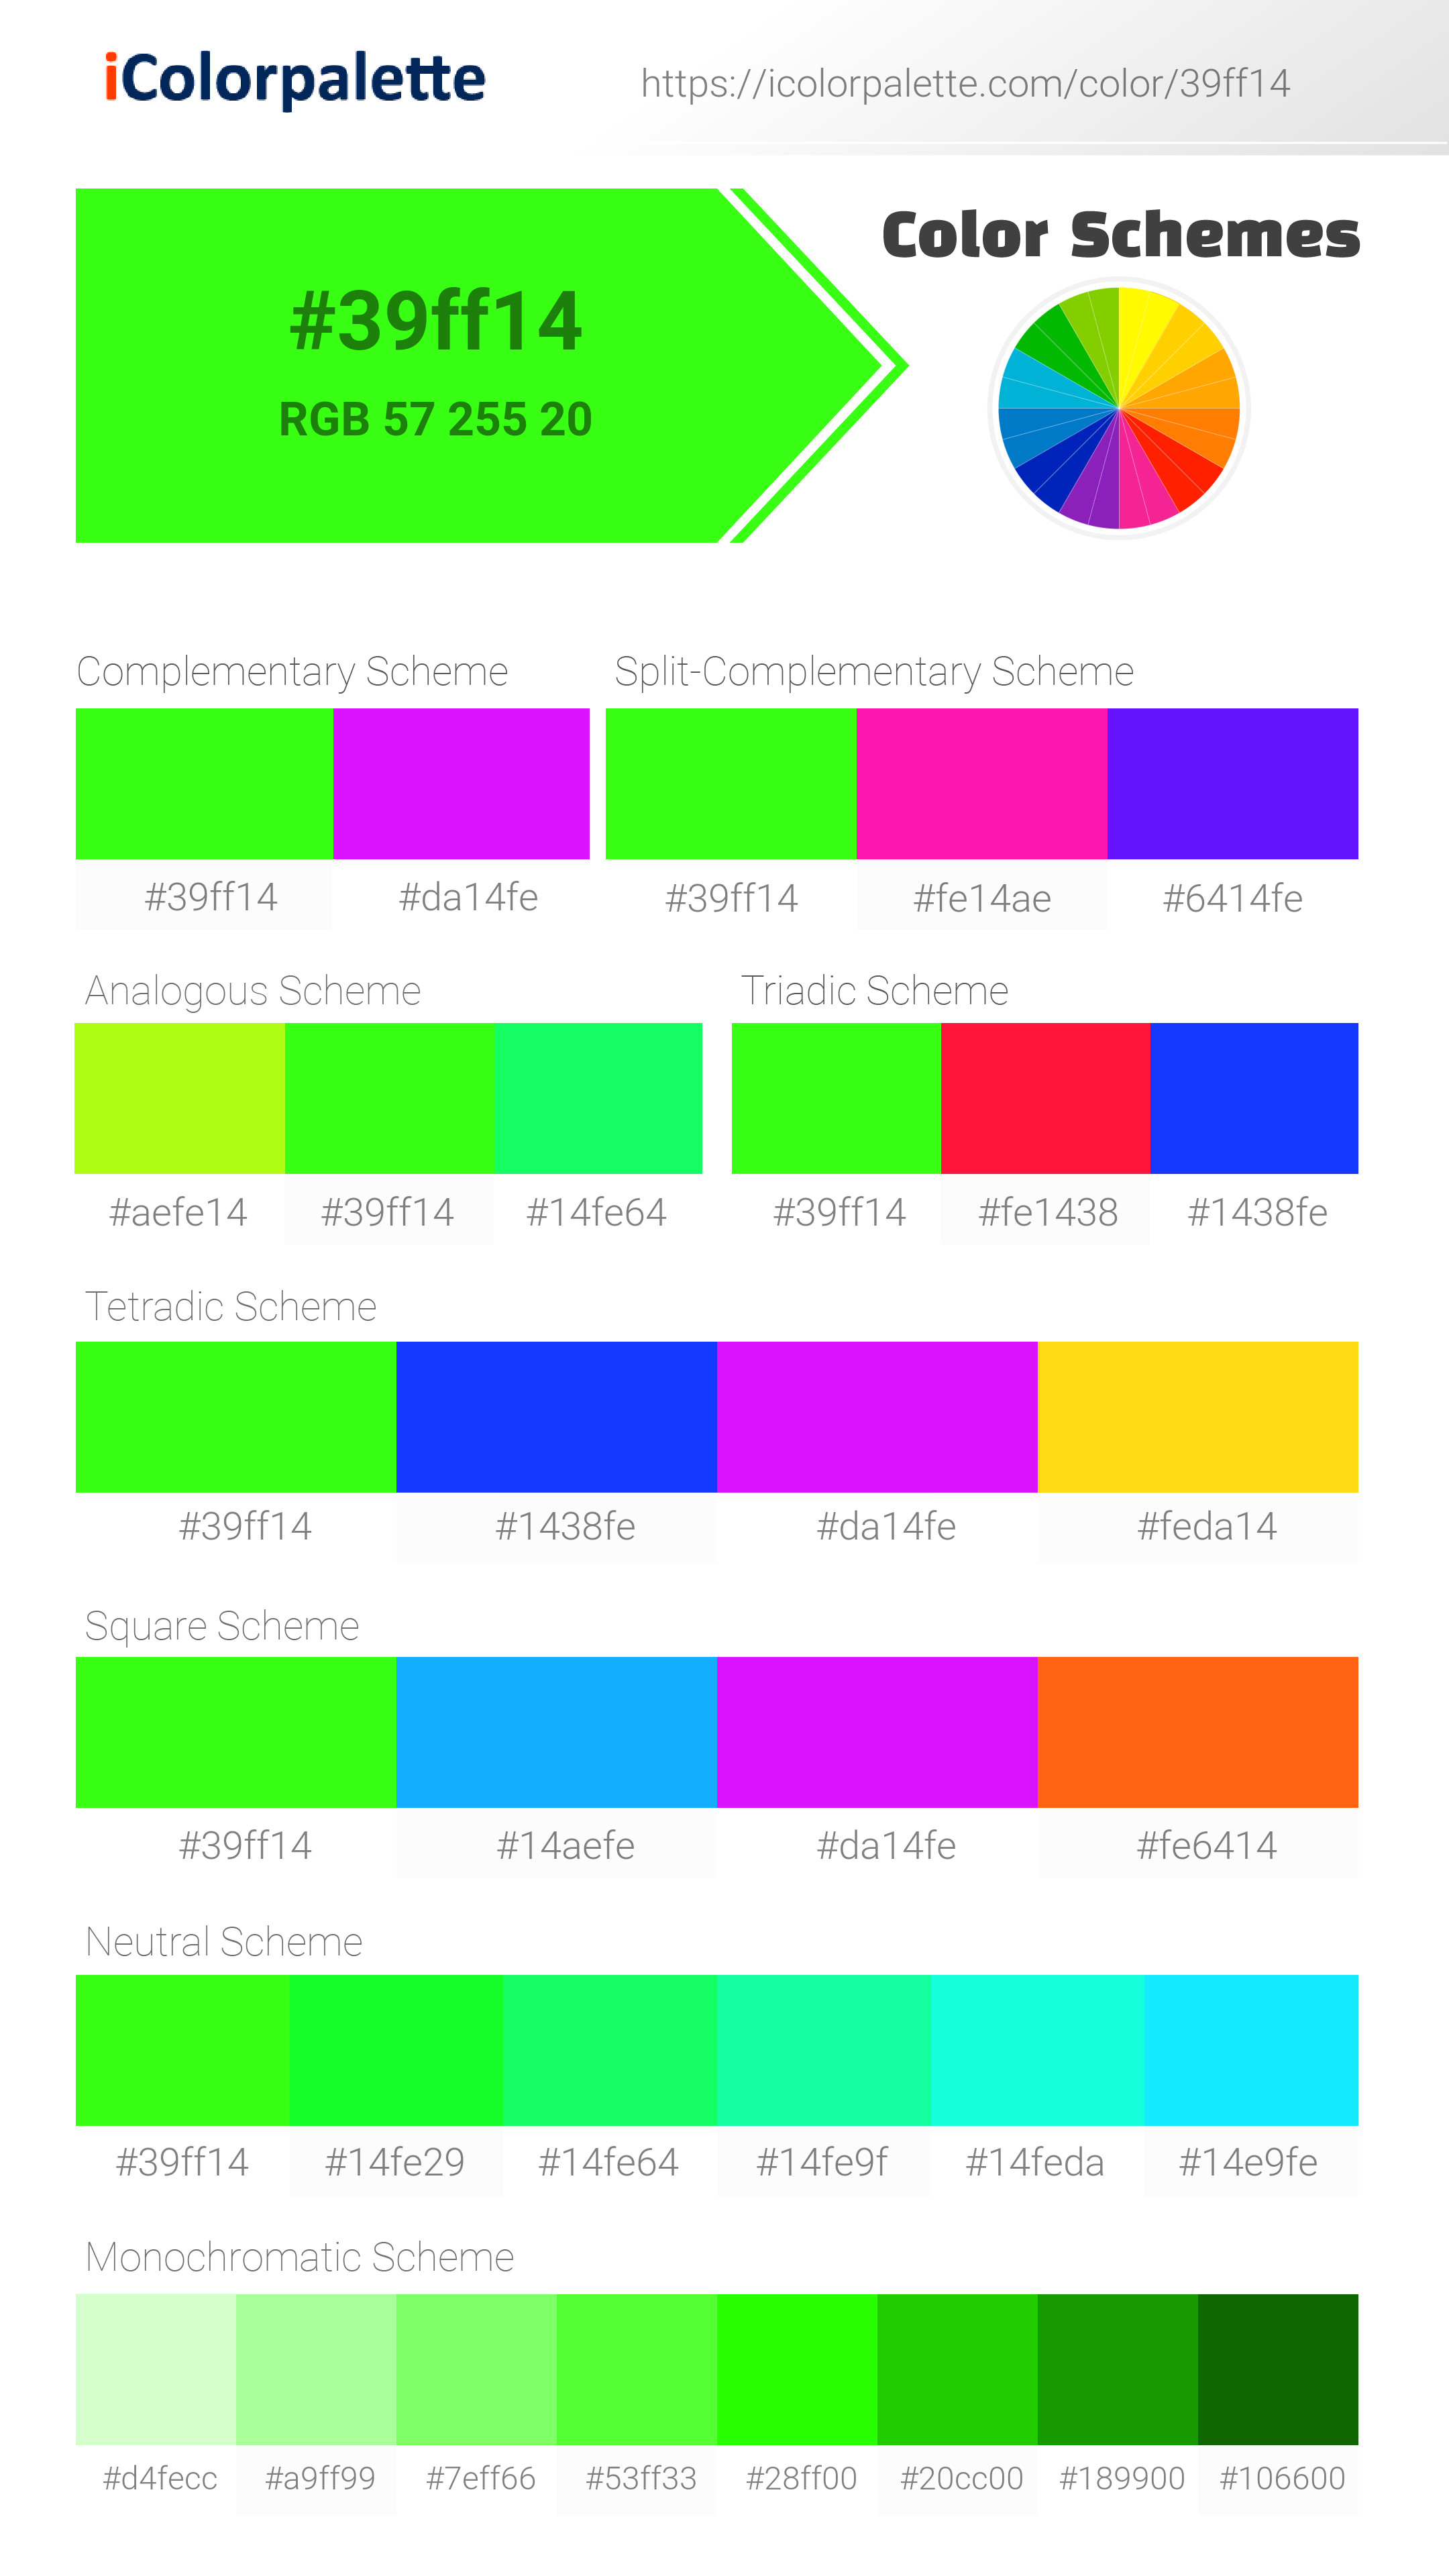 https://www.icolorpalette.com/download/schemes/39ff14_colorschemes_icolorpalette.jpg